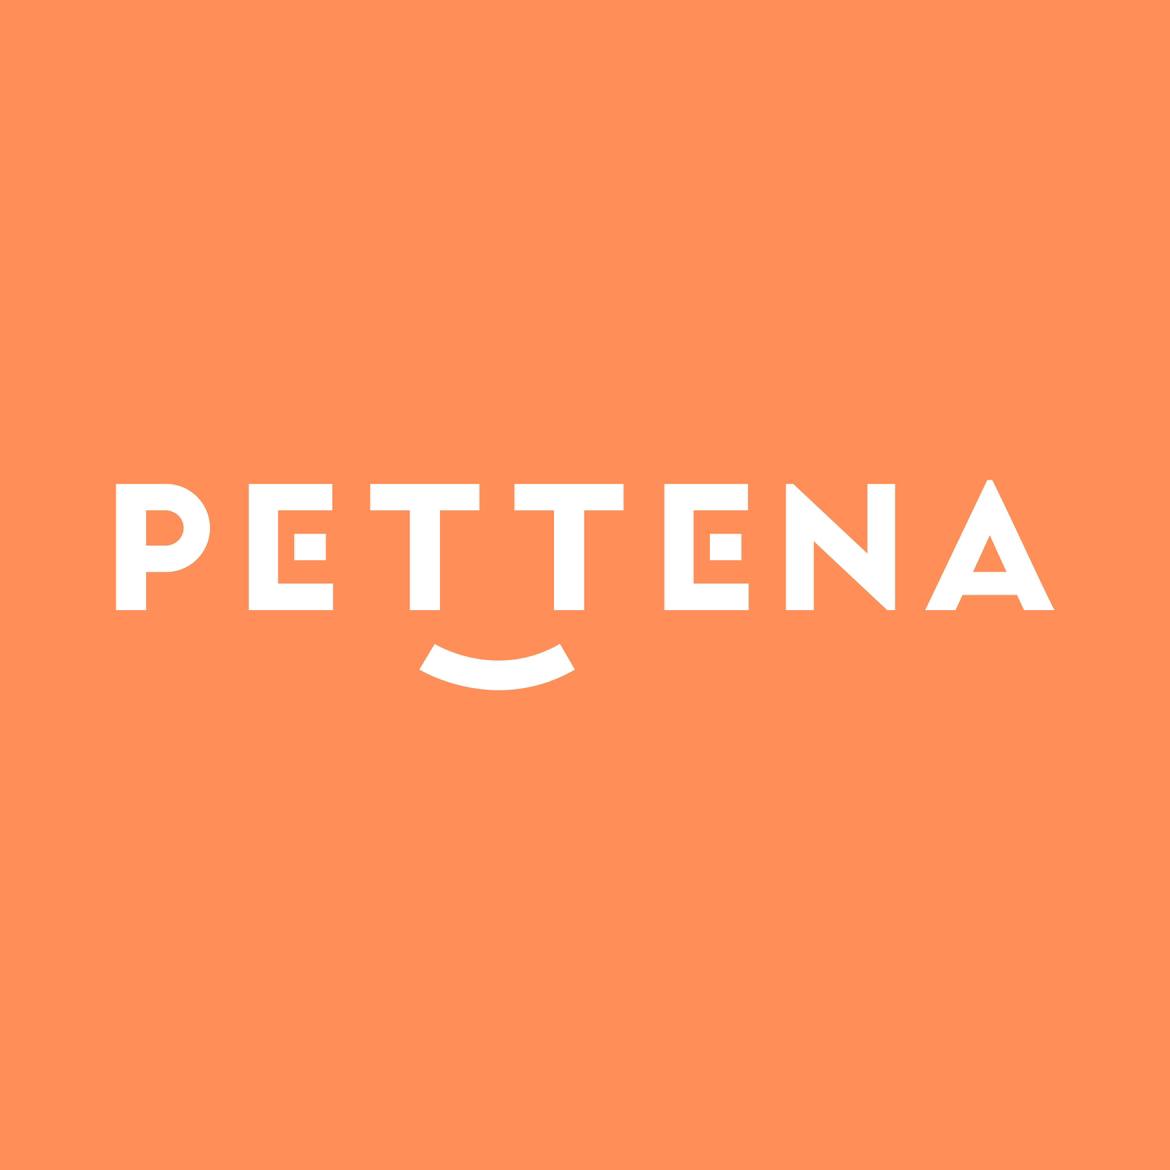 PETTENA's images